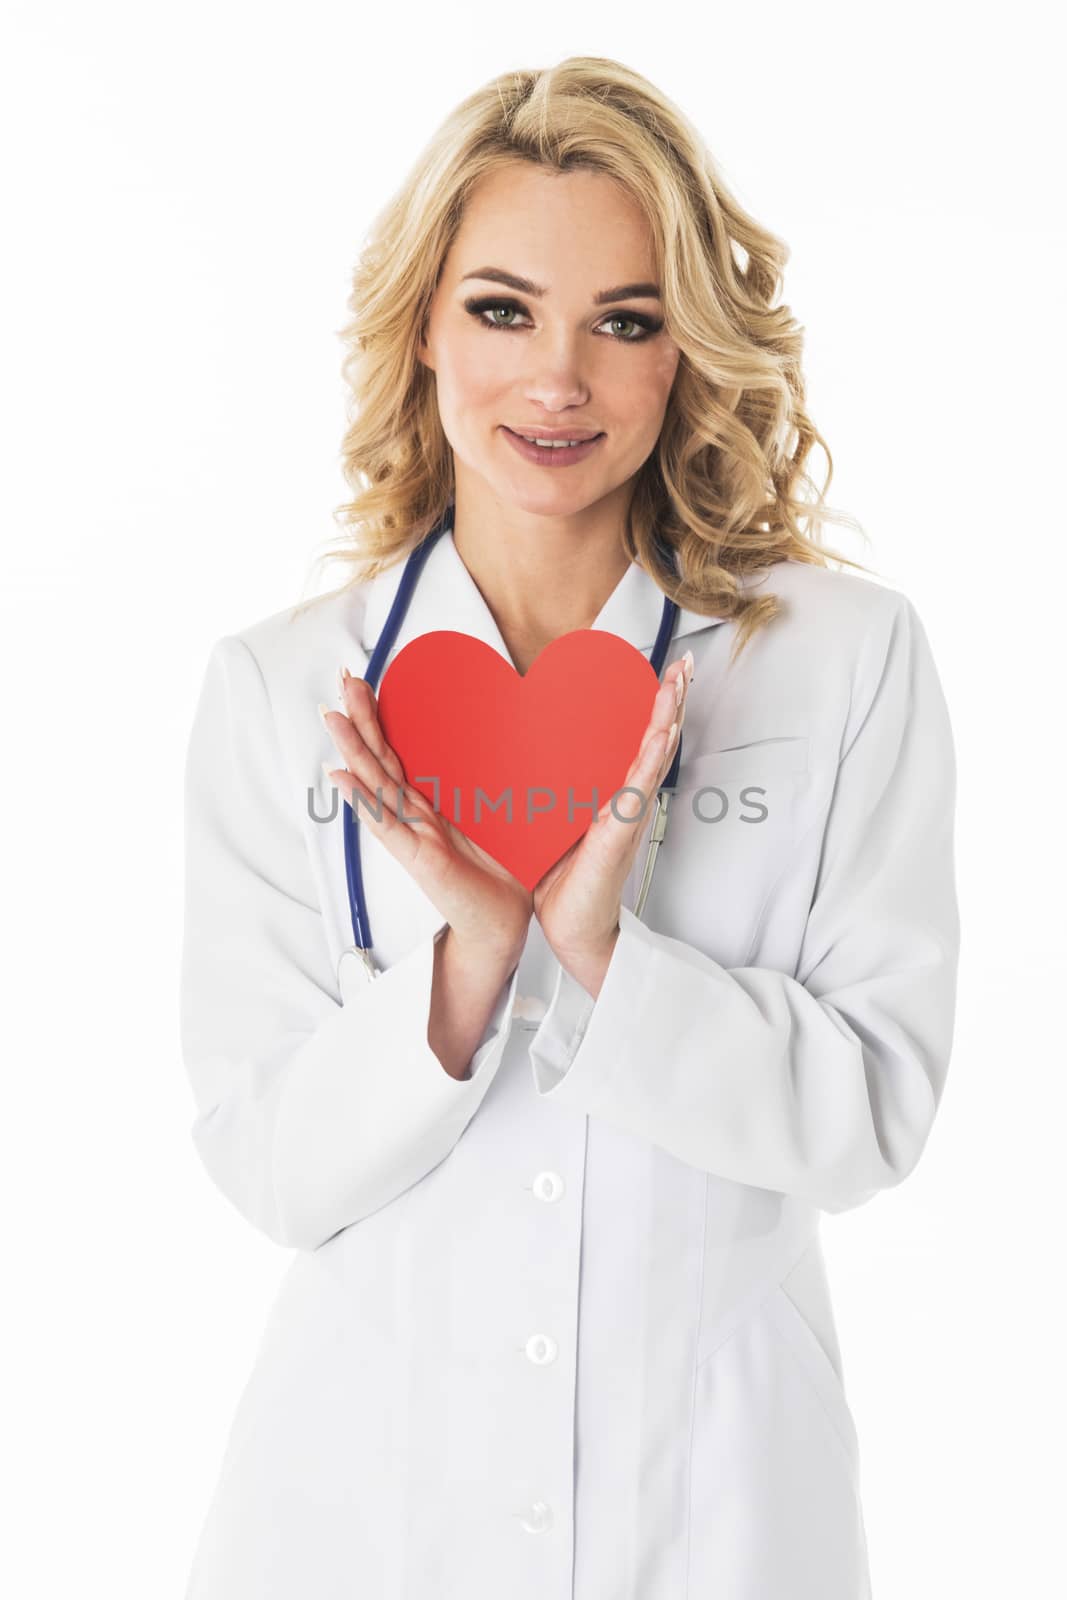 Smiling female doctor holding heart shape paper studio portrait isolated on white background